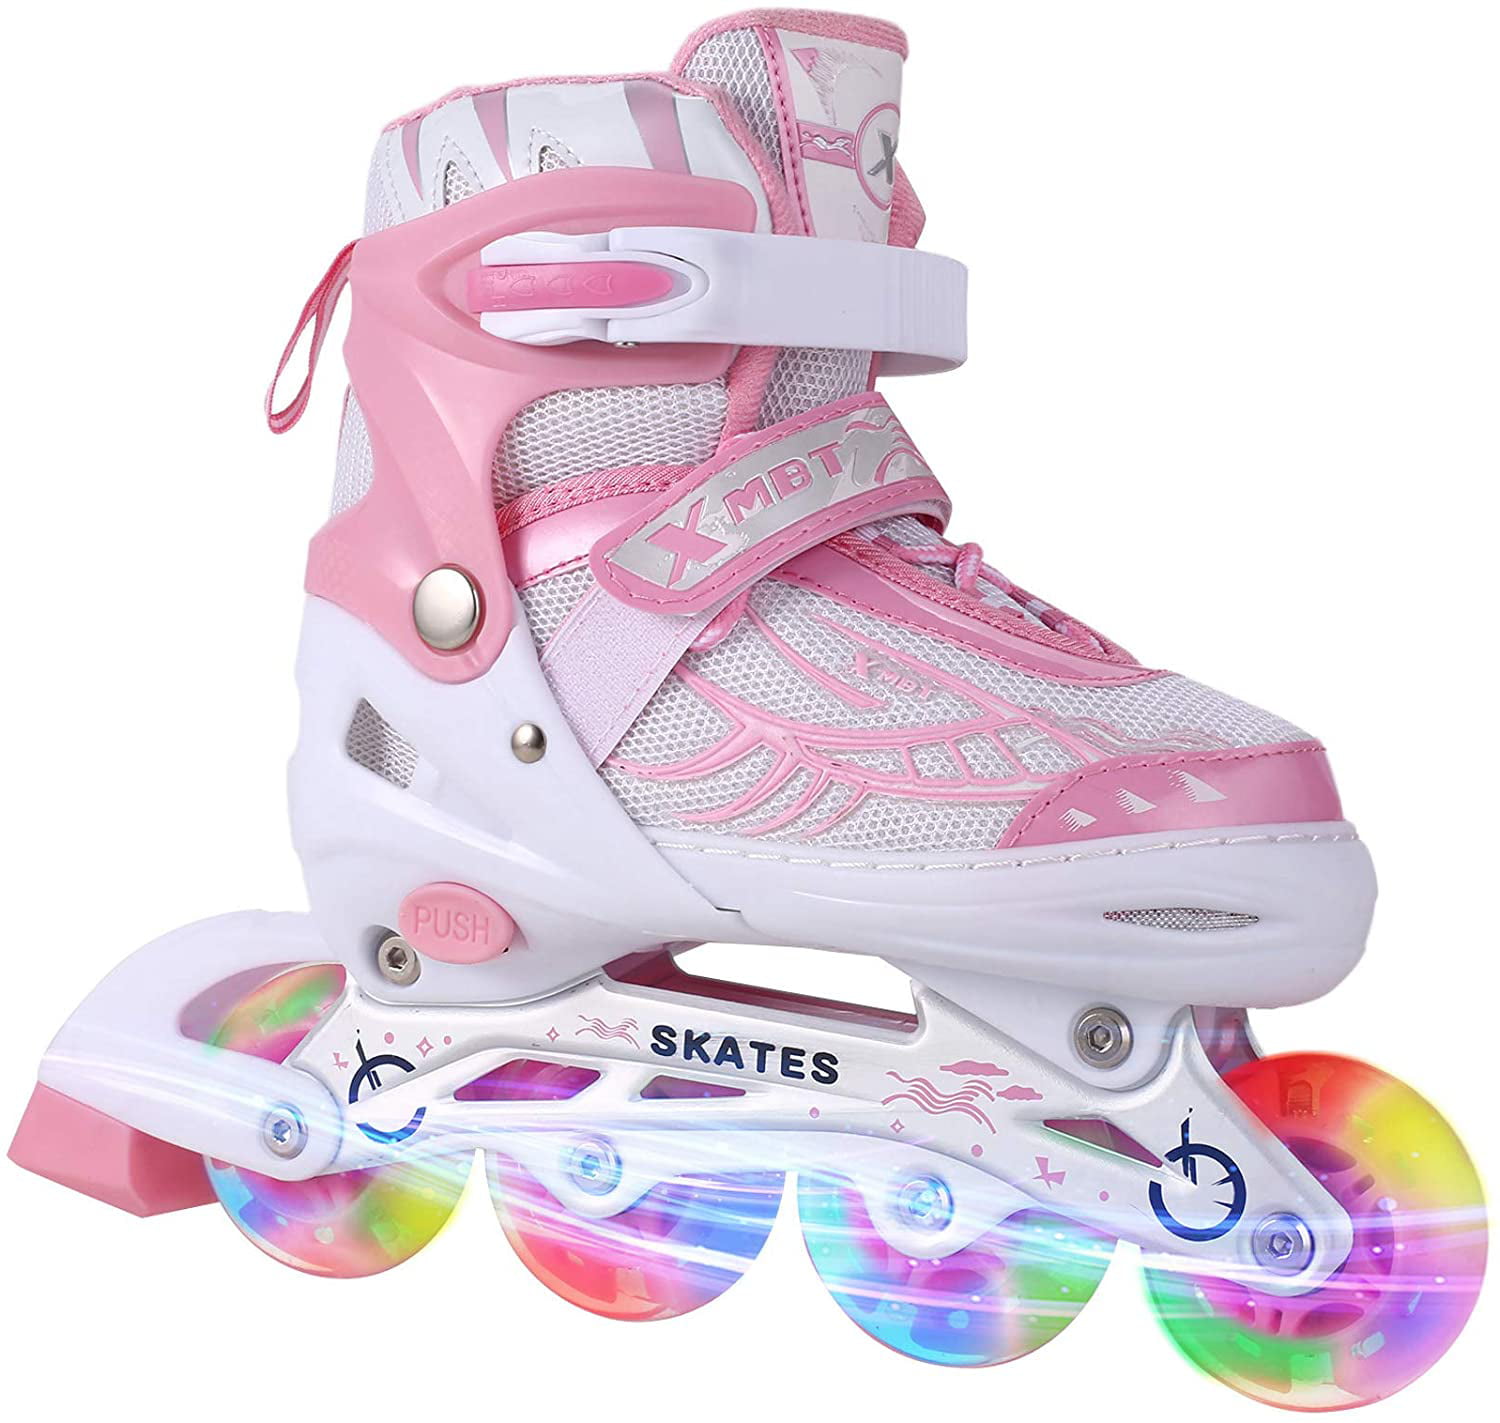 Caroma Inline Skates Women with 8 Lights Up LED Wheels Outdoor 4 Size Adjustable Roller Skates for Kids Women Men 